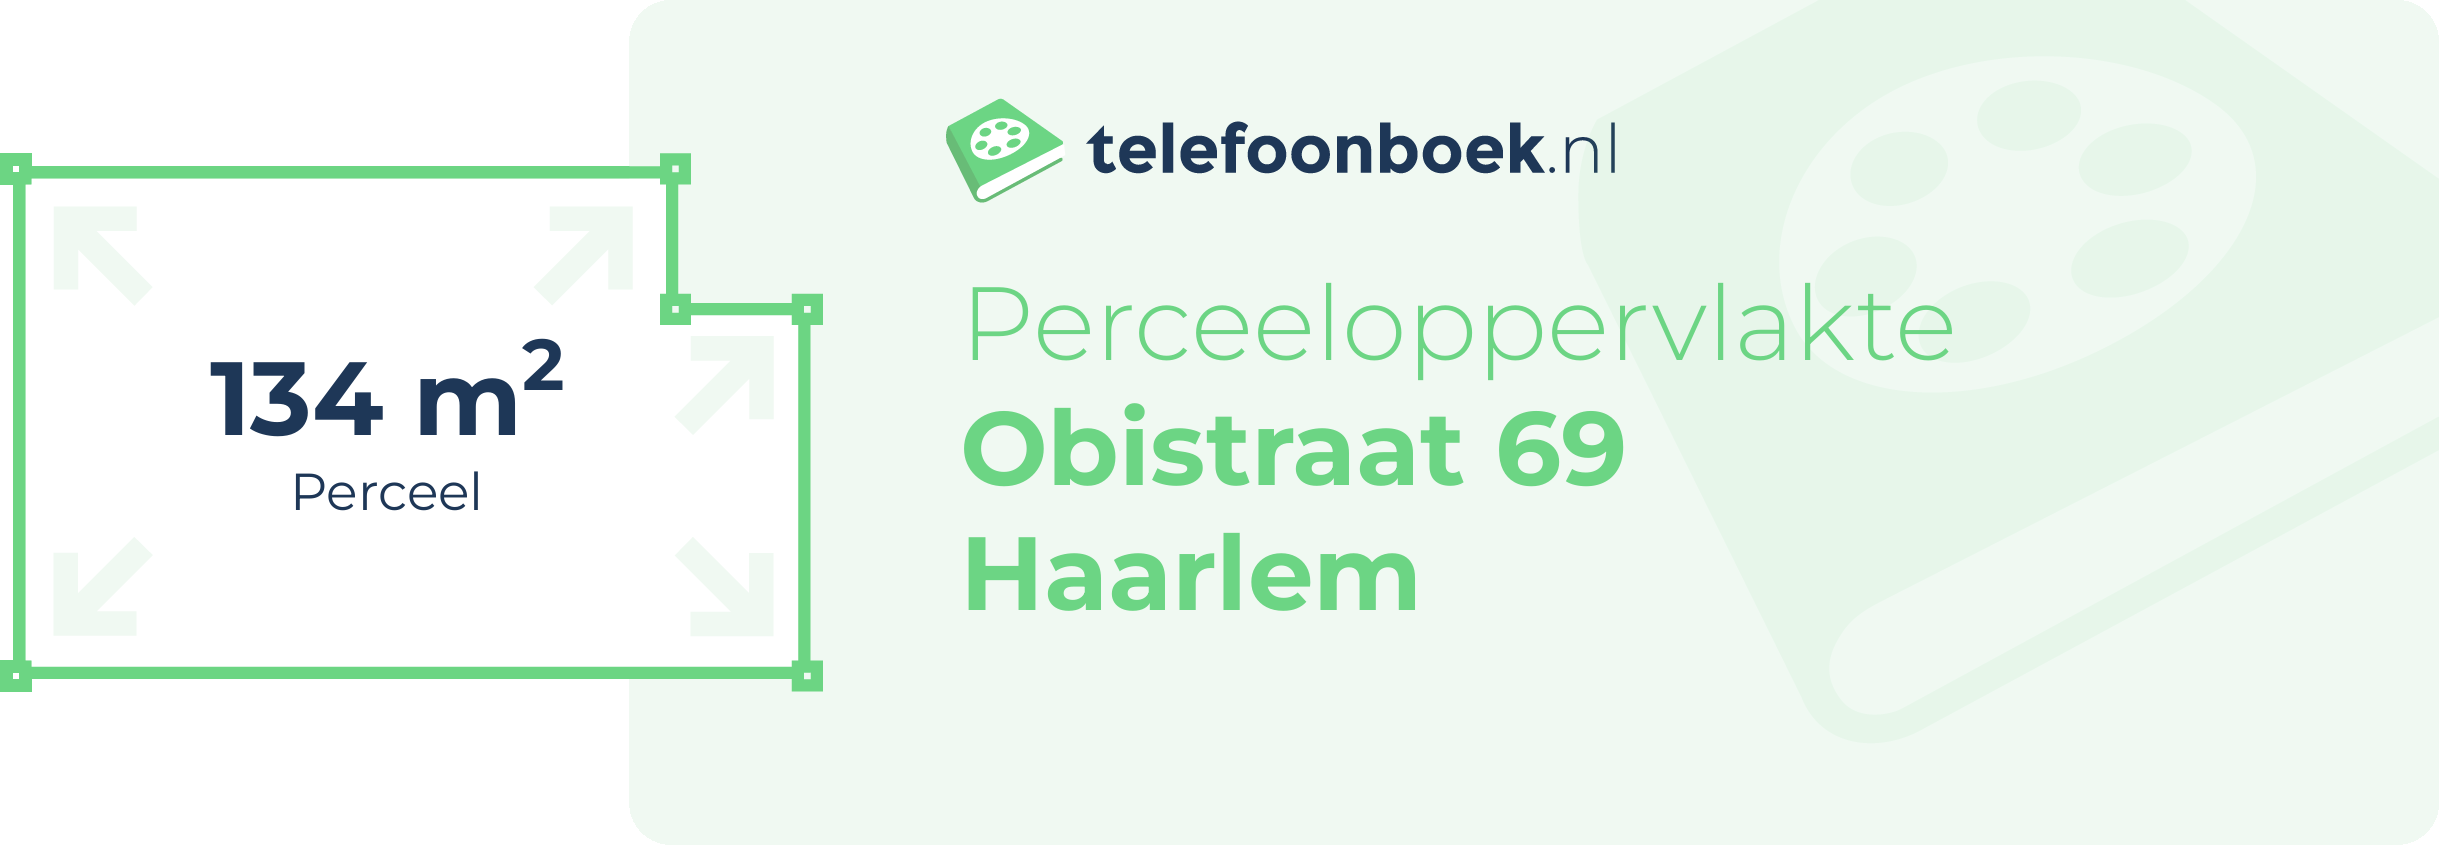 Perceeloppervlakte Obistraat 69 Haarlem